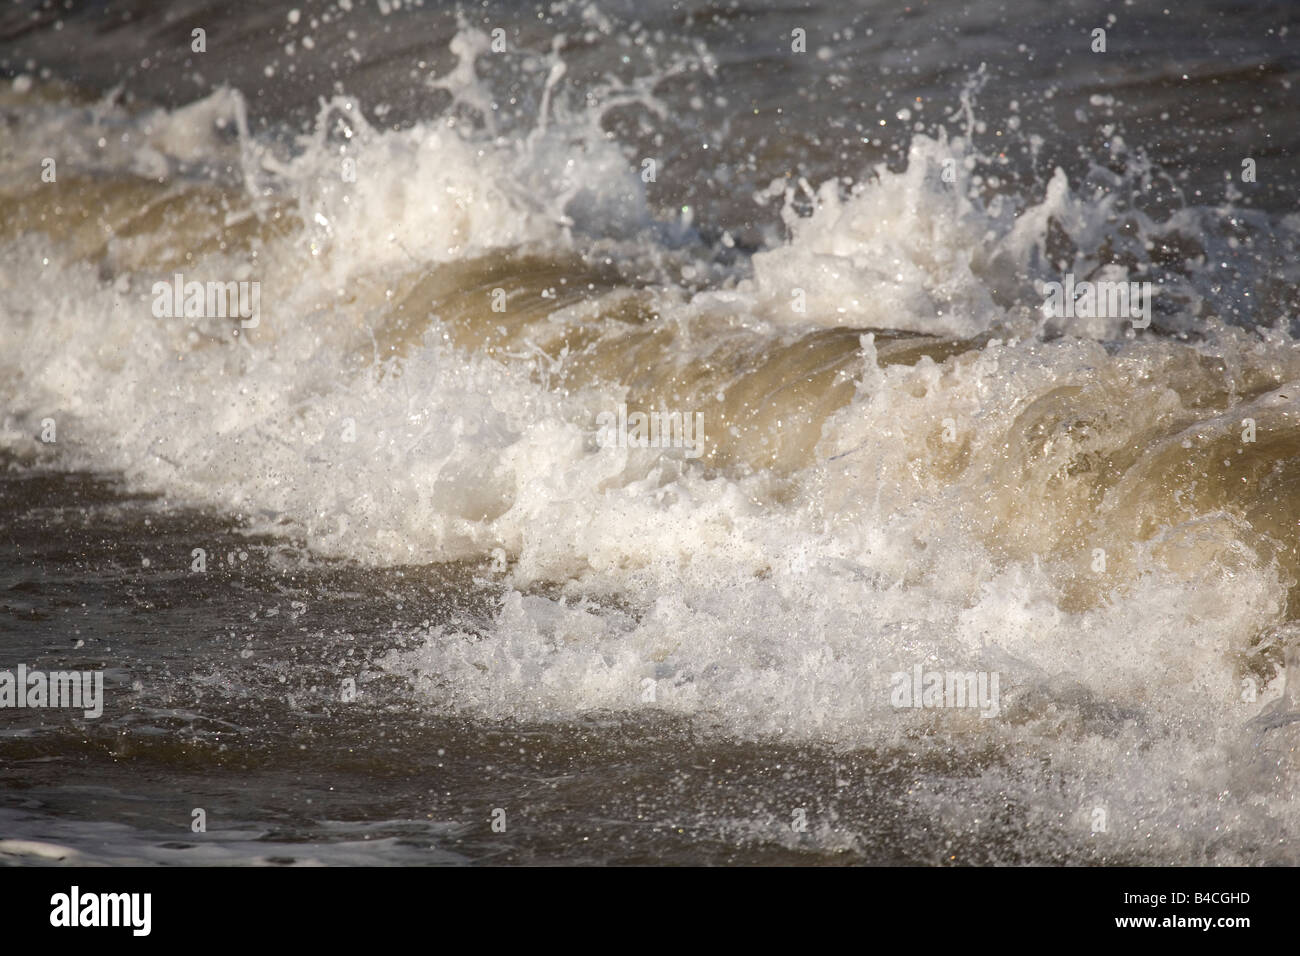 Waves crash and spray onto the northeast coast of England. Stock Photo